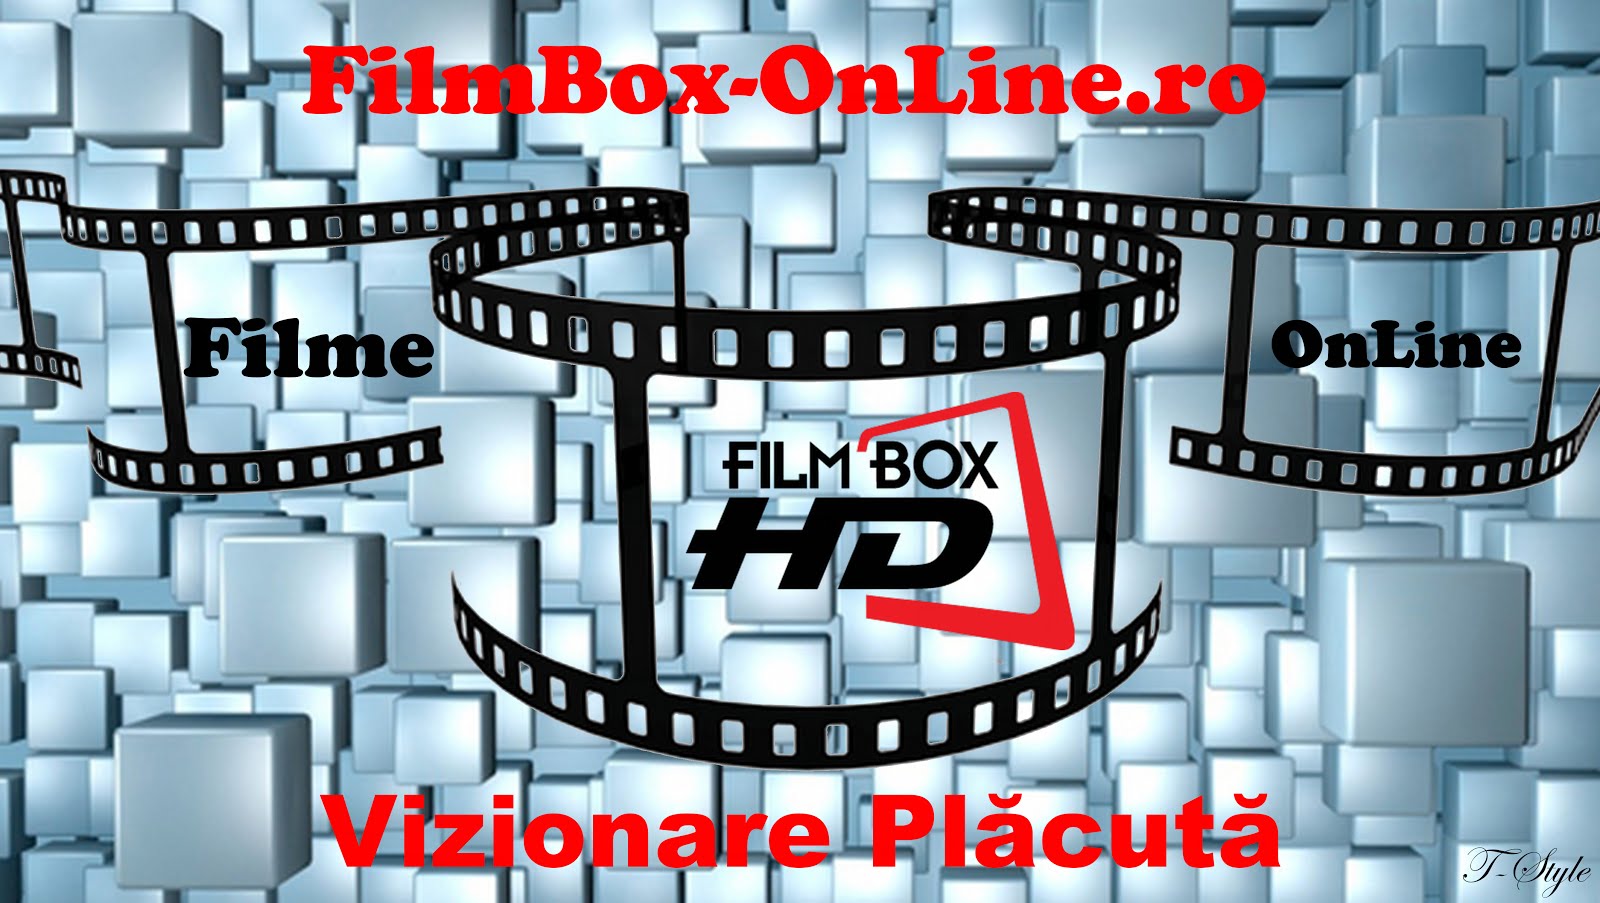 FILMBOX-Filme Online